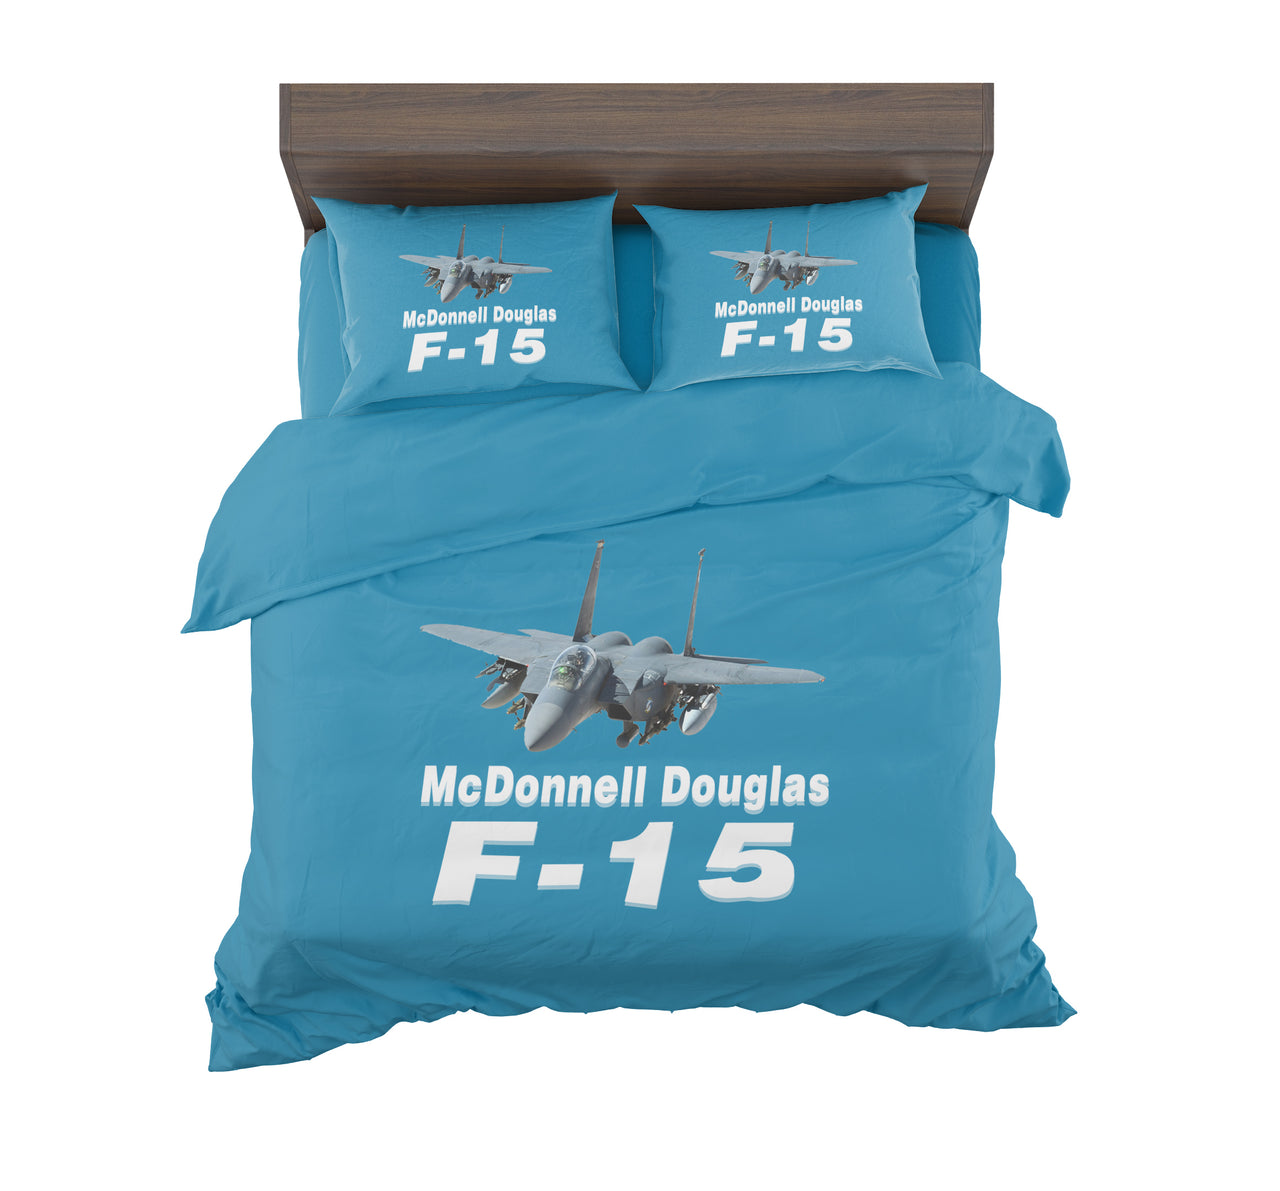 The McDonnell Douglas F15 Designed Bedding Sets